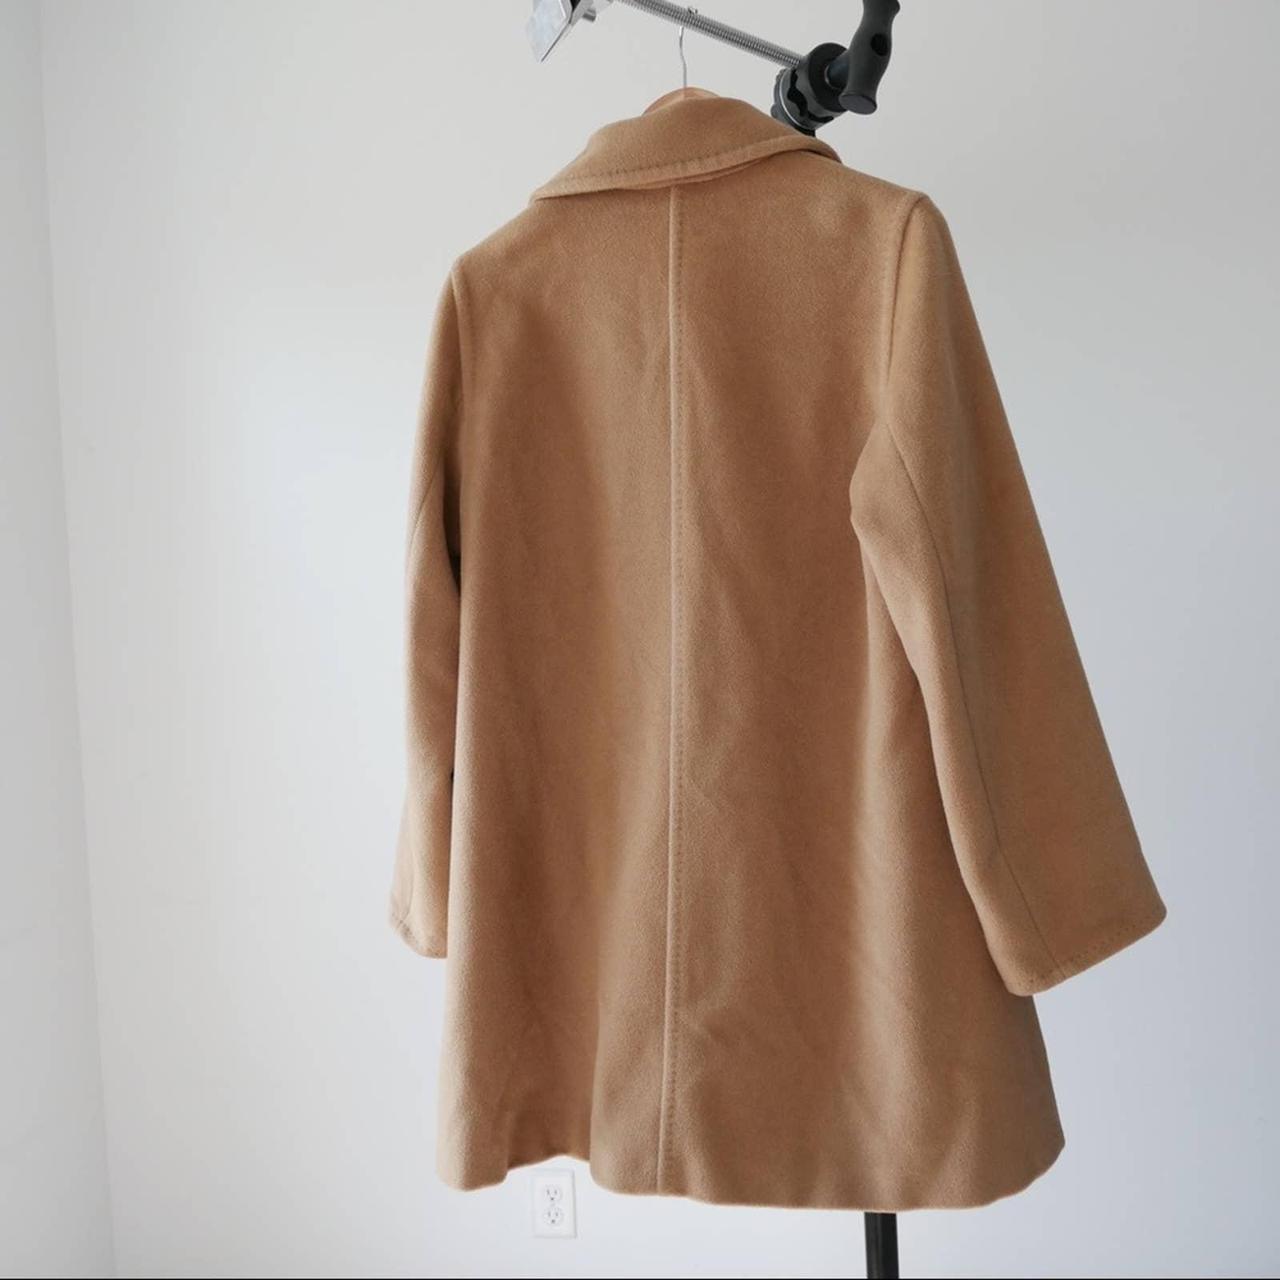 Product Image 3 - Max Mara camel wool coat